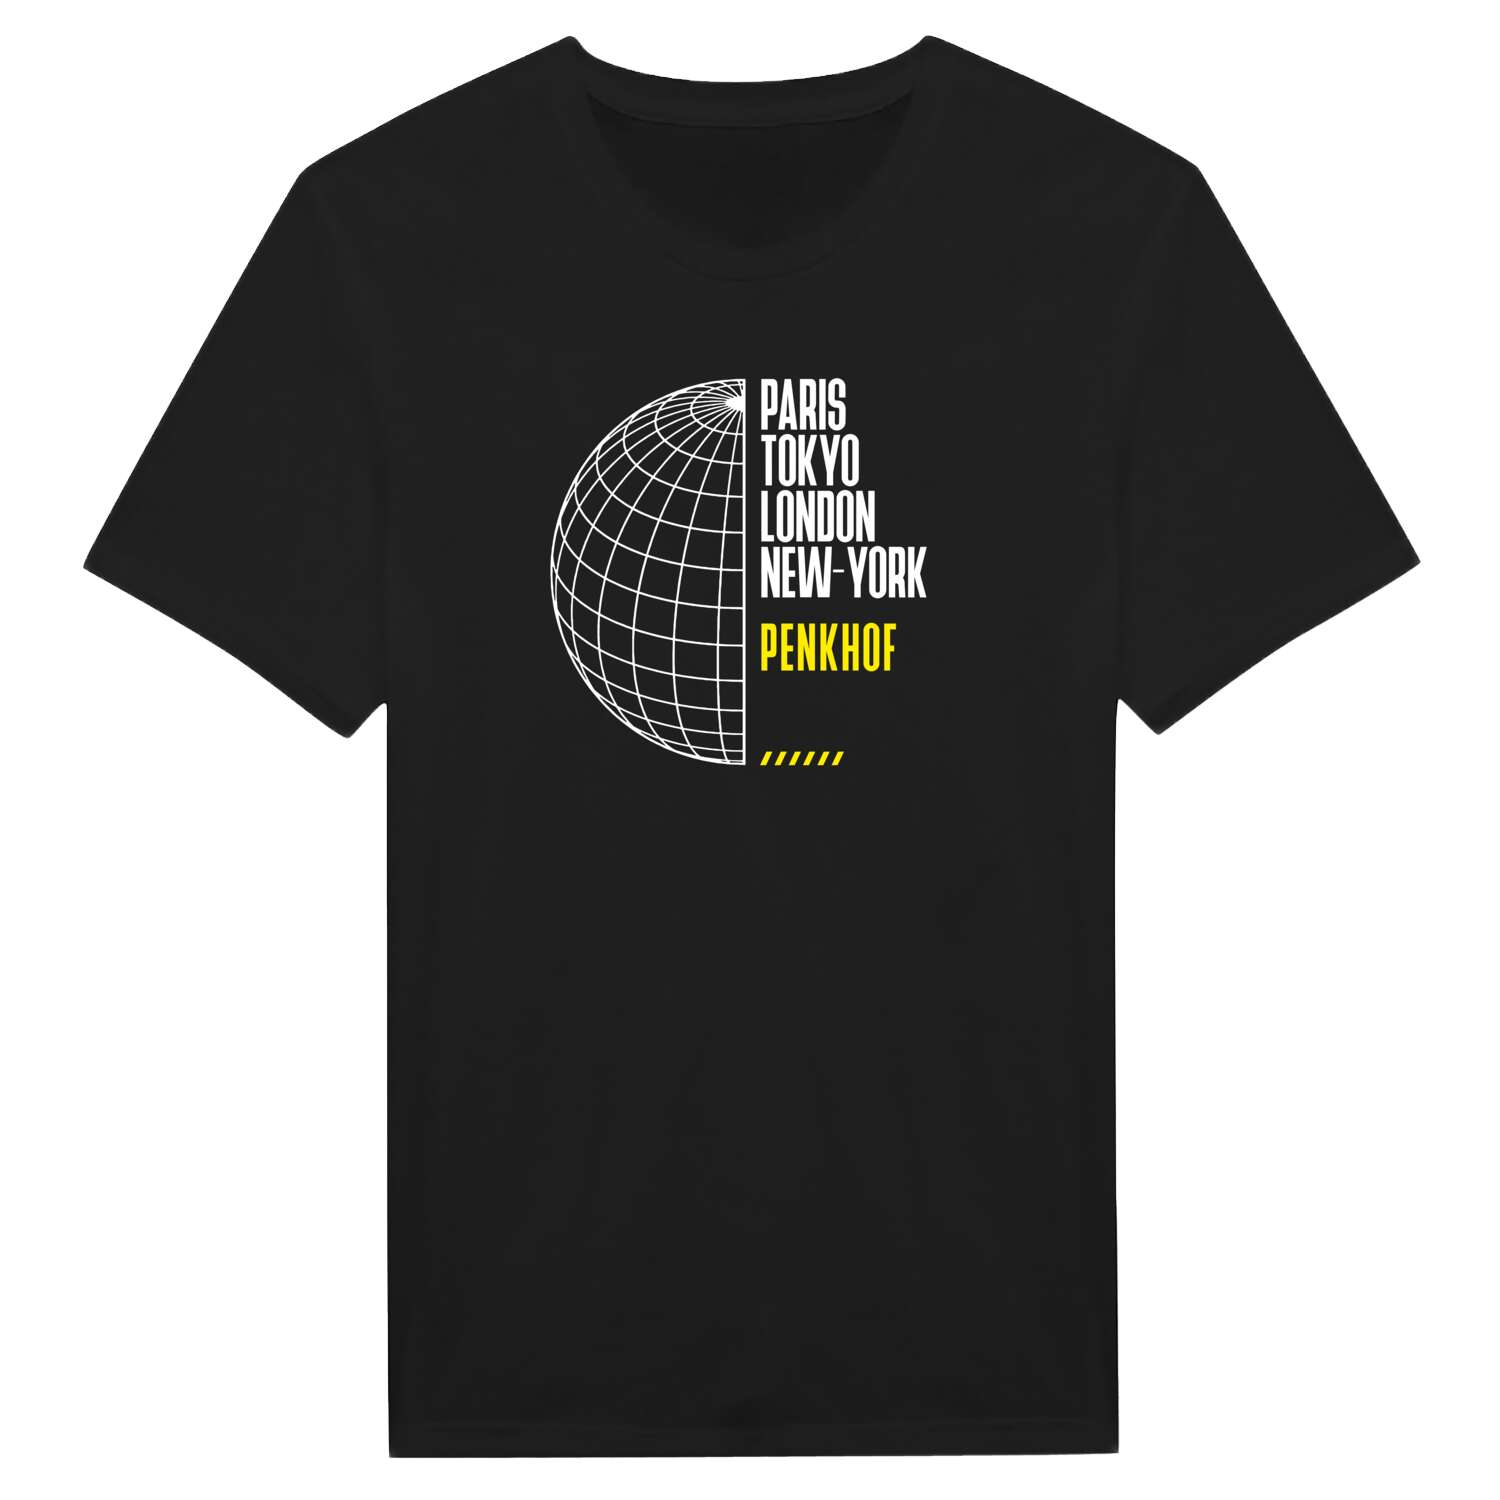 Penkhof T-Shirt »Paris Tokyo London«